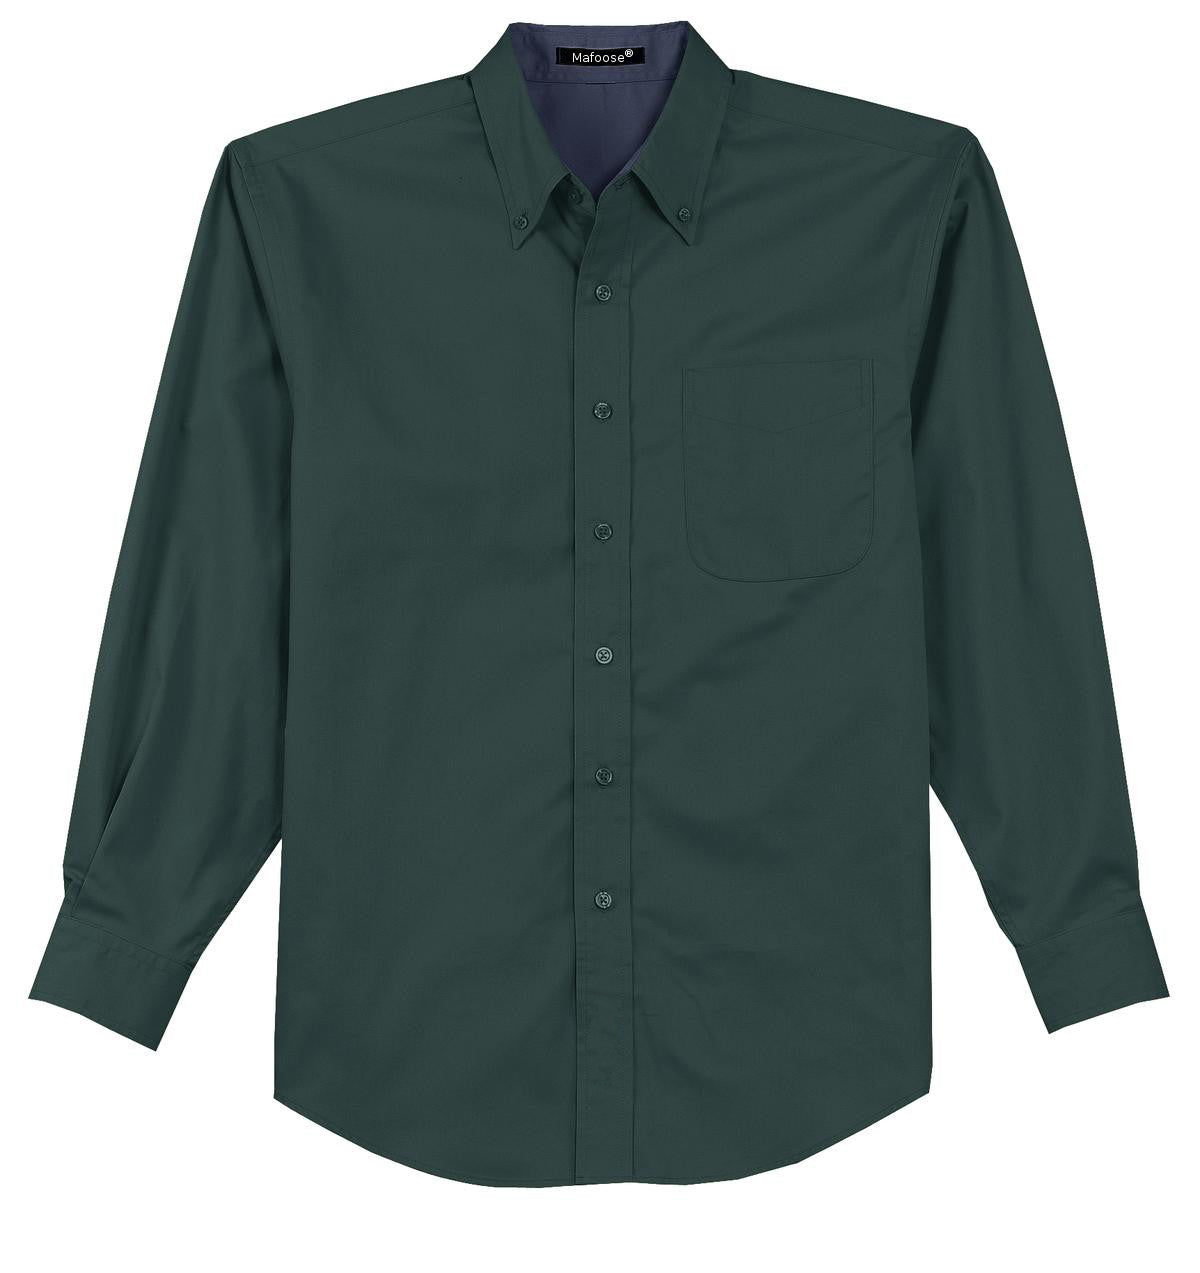 Mafoose Men's Tall Long Sleeve Easy Care Shirt Dark Green/ Navy-Front